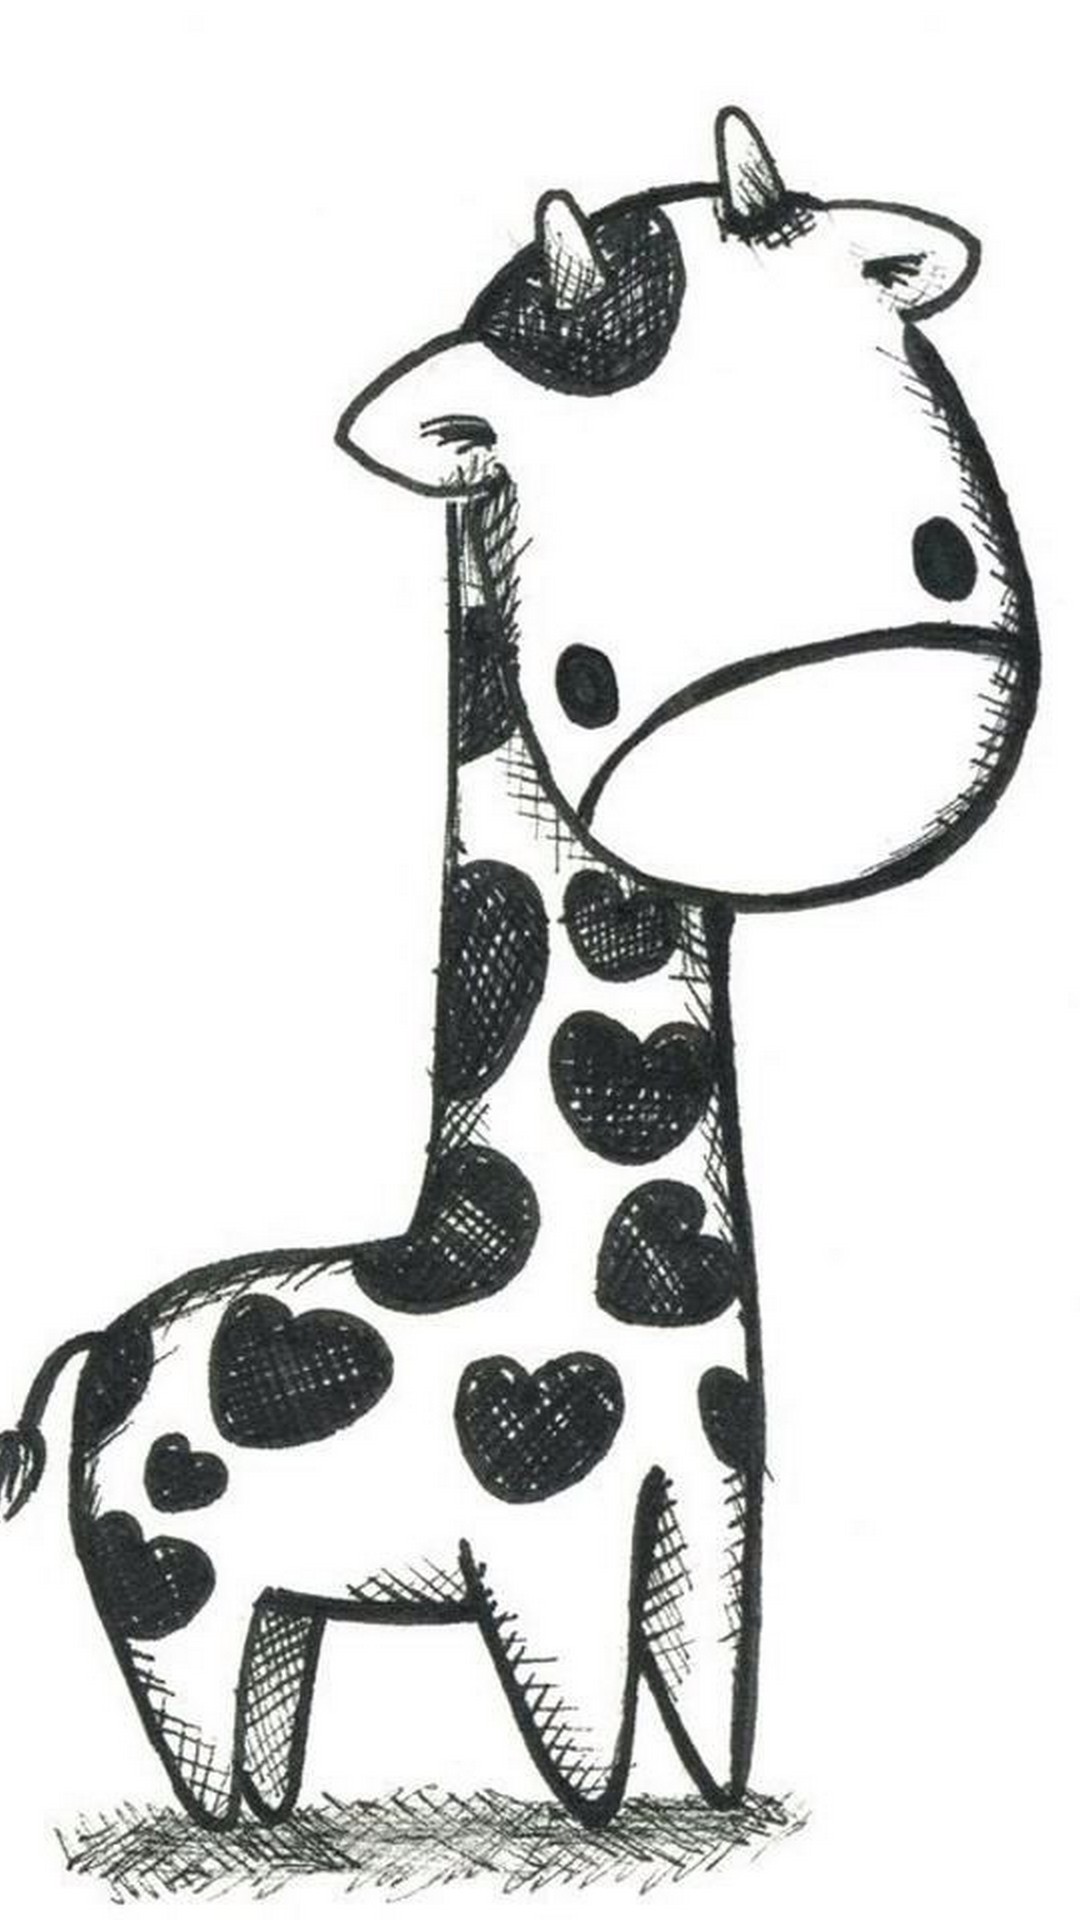 Giraffe Wallpaper Black and White 3D iPhone Wallpaper